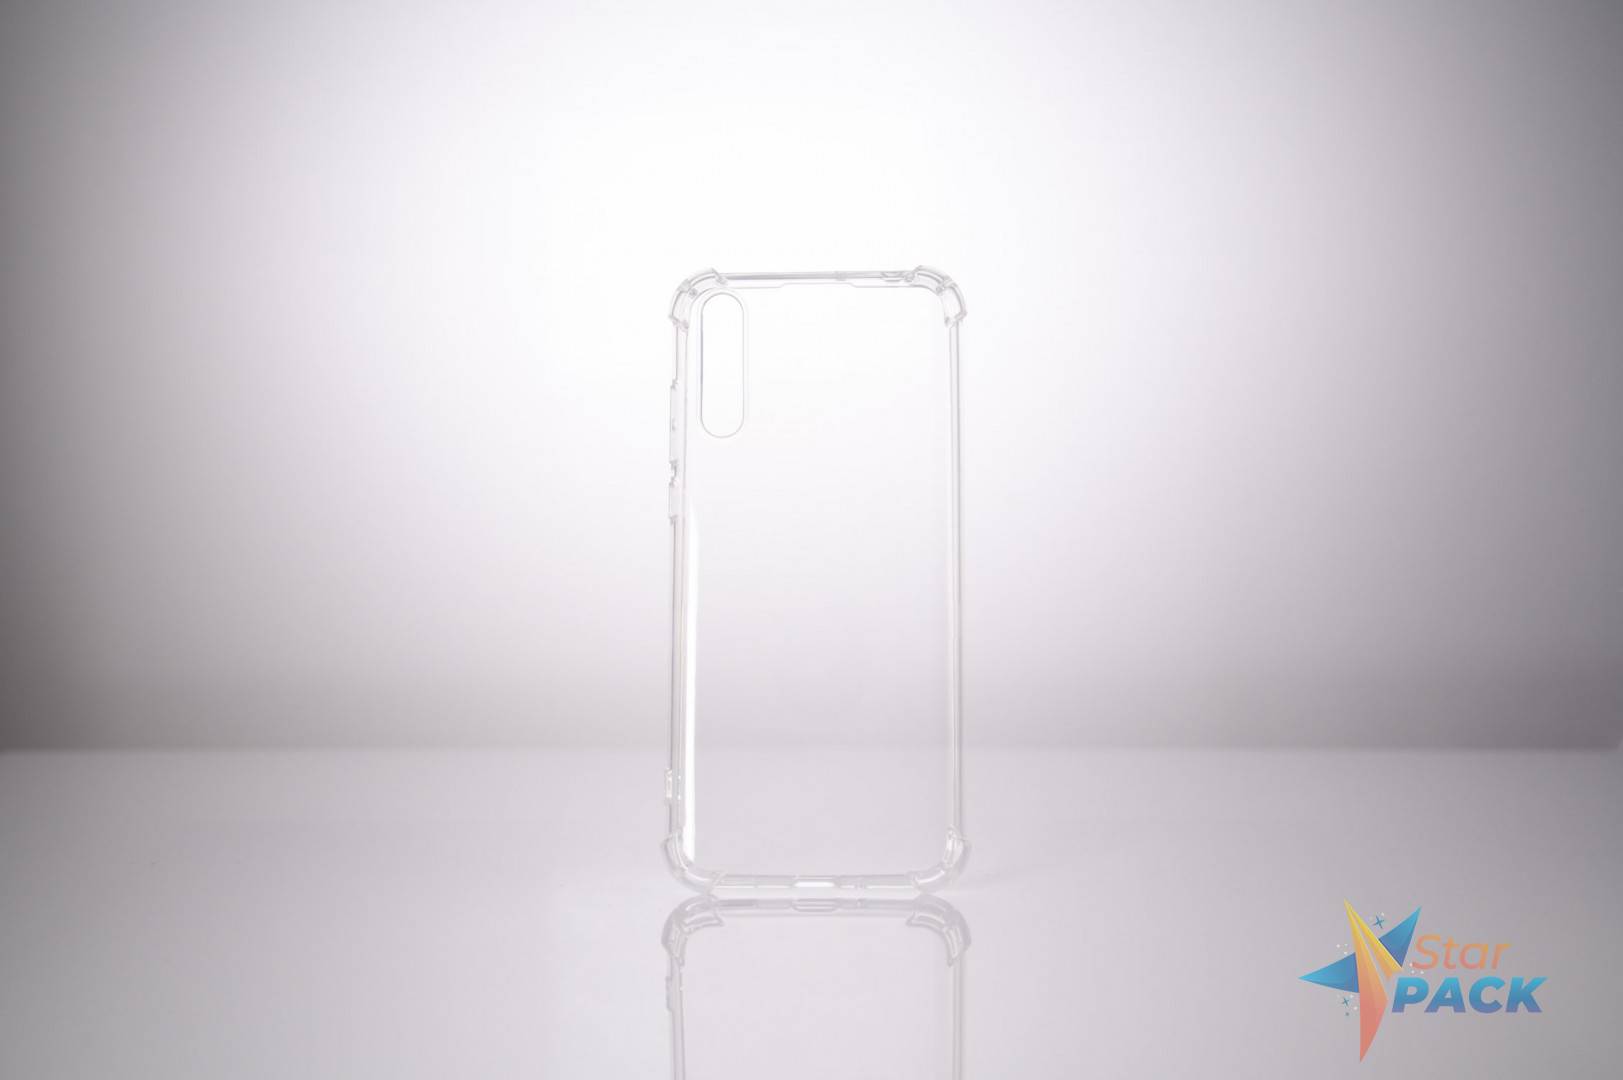 Husa Huawei telefon P Smart S, transparent, tip back cover, protectie suplimentara antisoc la colturi, material flexibil TPU